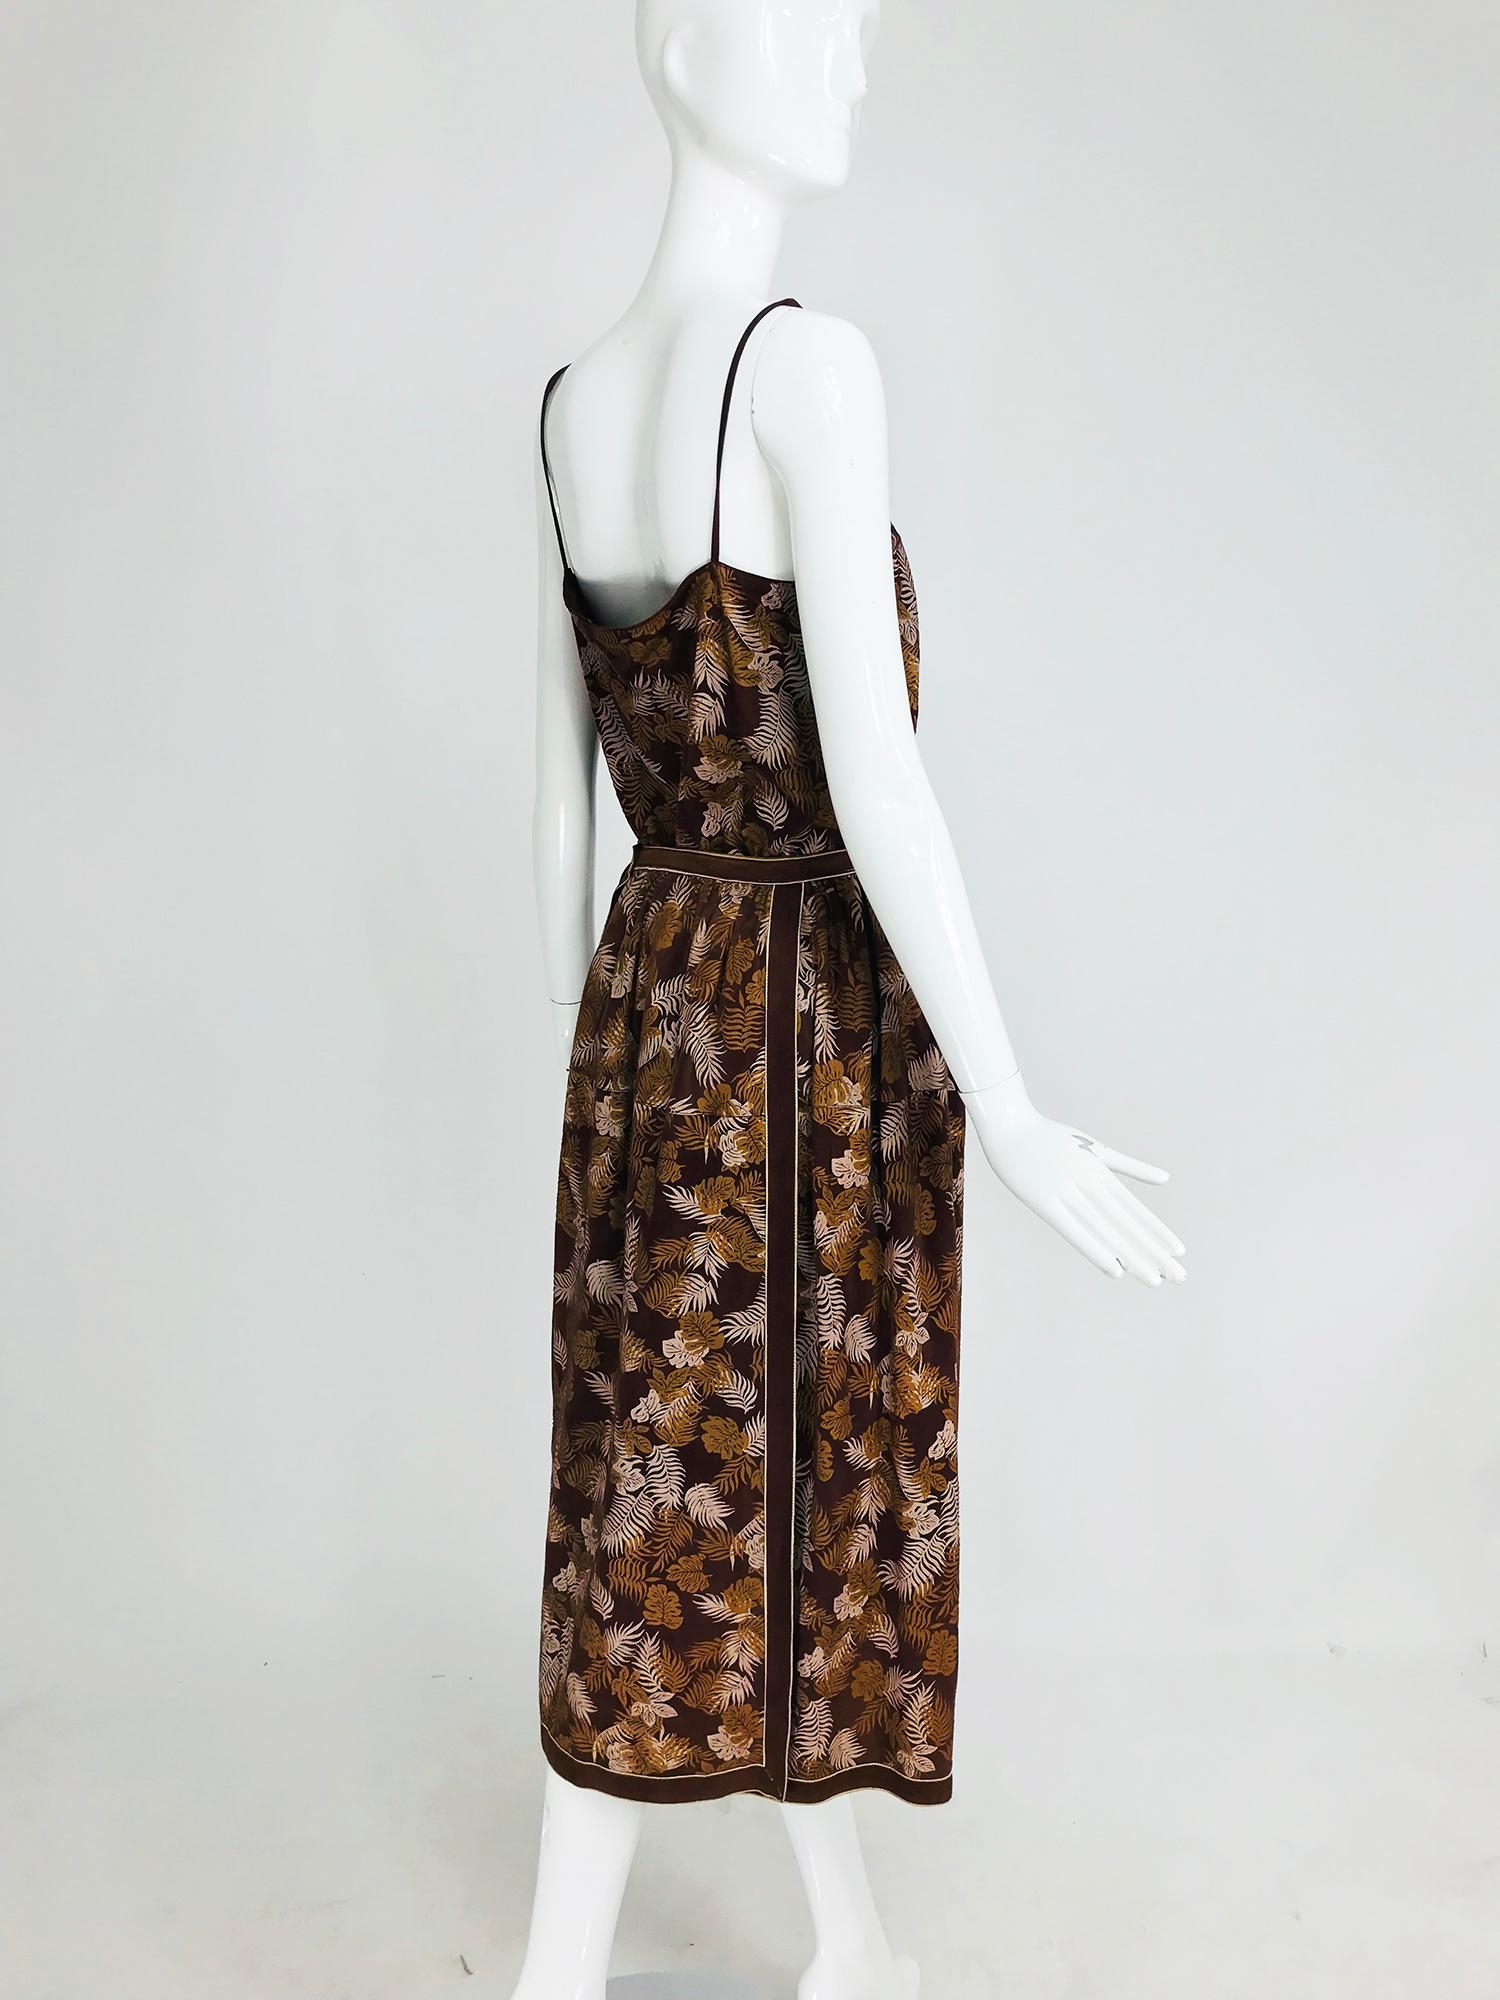 Roberto Cavalli 1970s Printed Suede Top and Skirt Set Rare 5